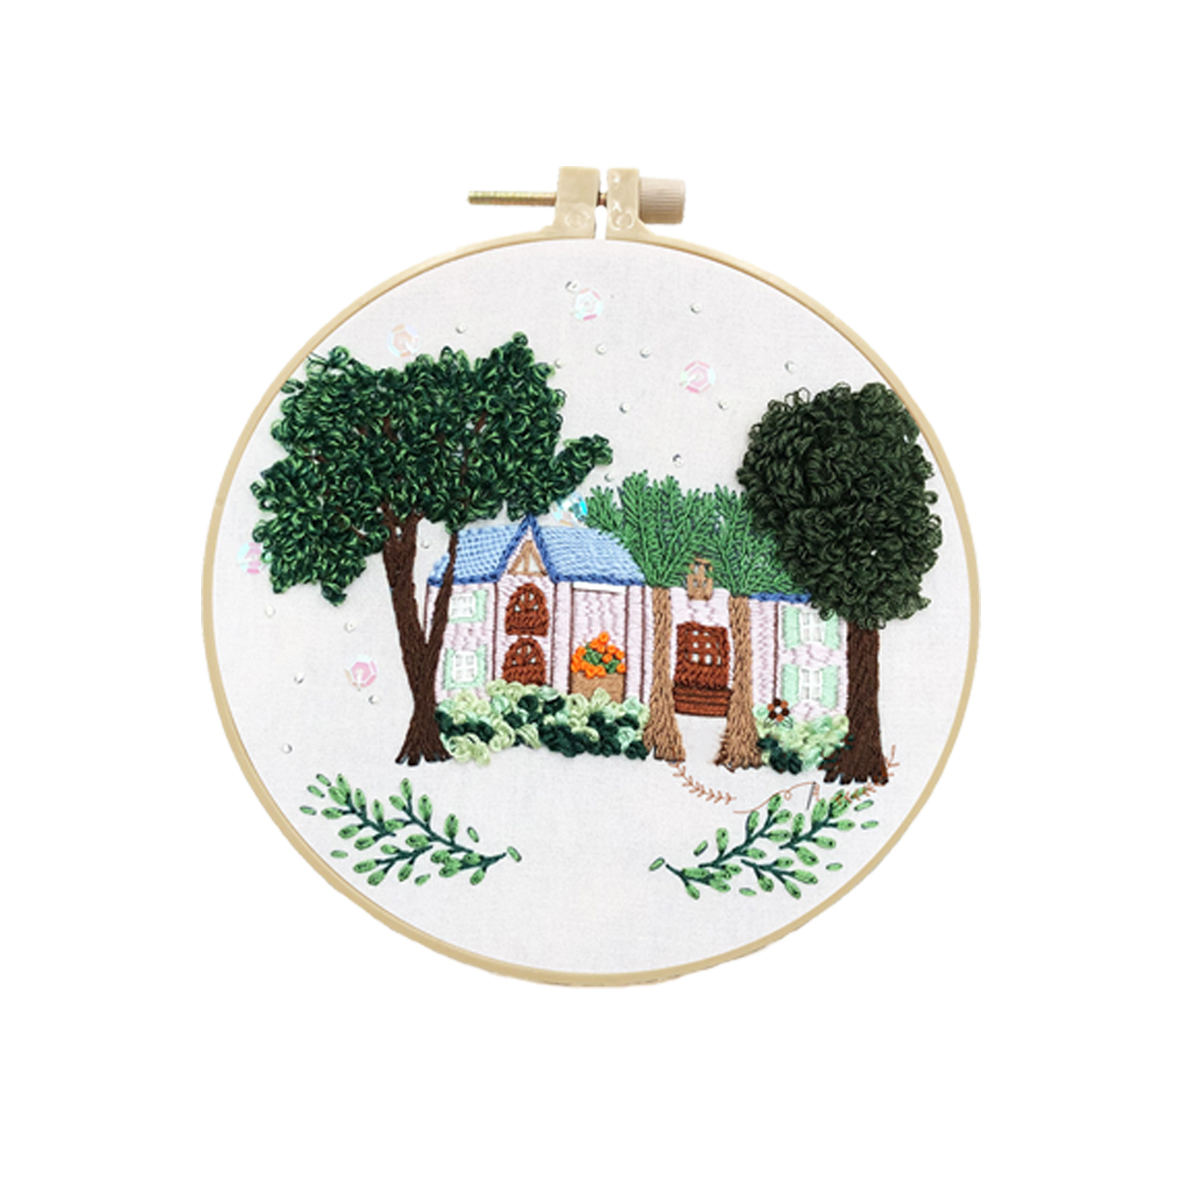 DIY Handmade Embroidery Cross stitch kit - Rural Cottage Pattern